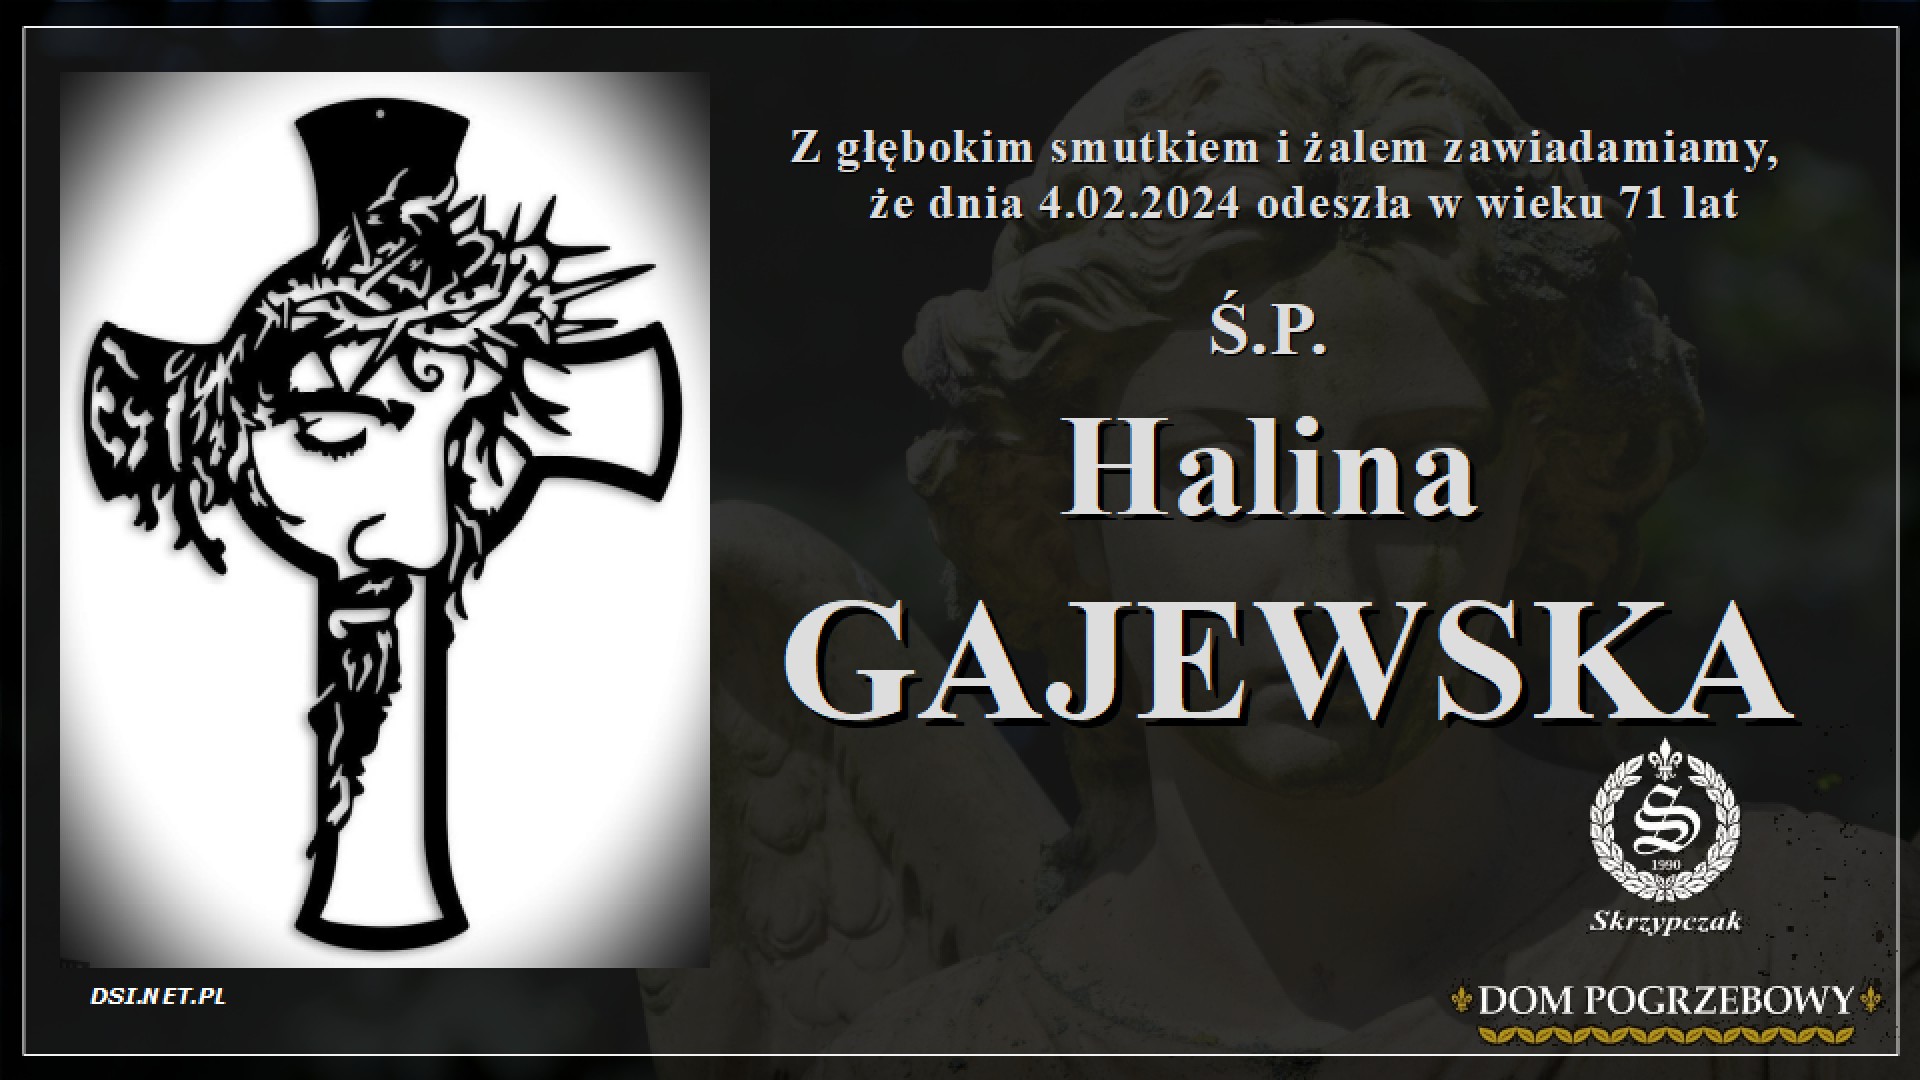 Ś.P. Halina Gajewska